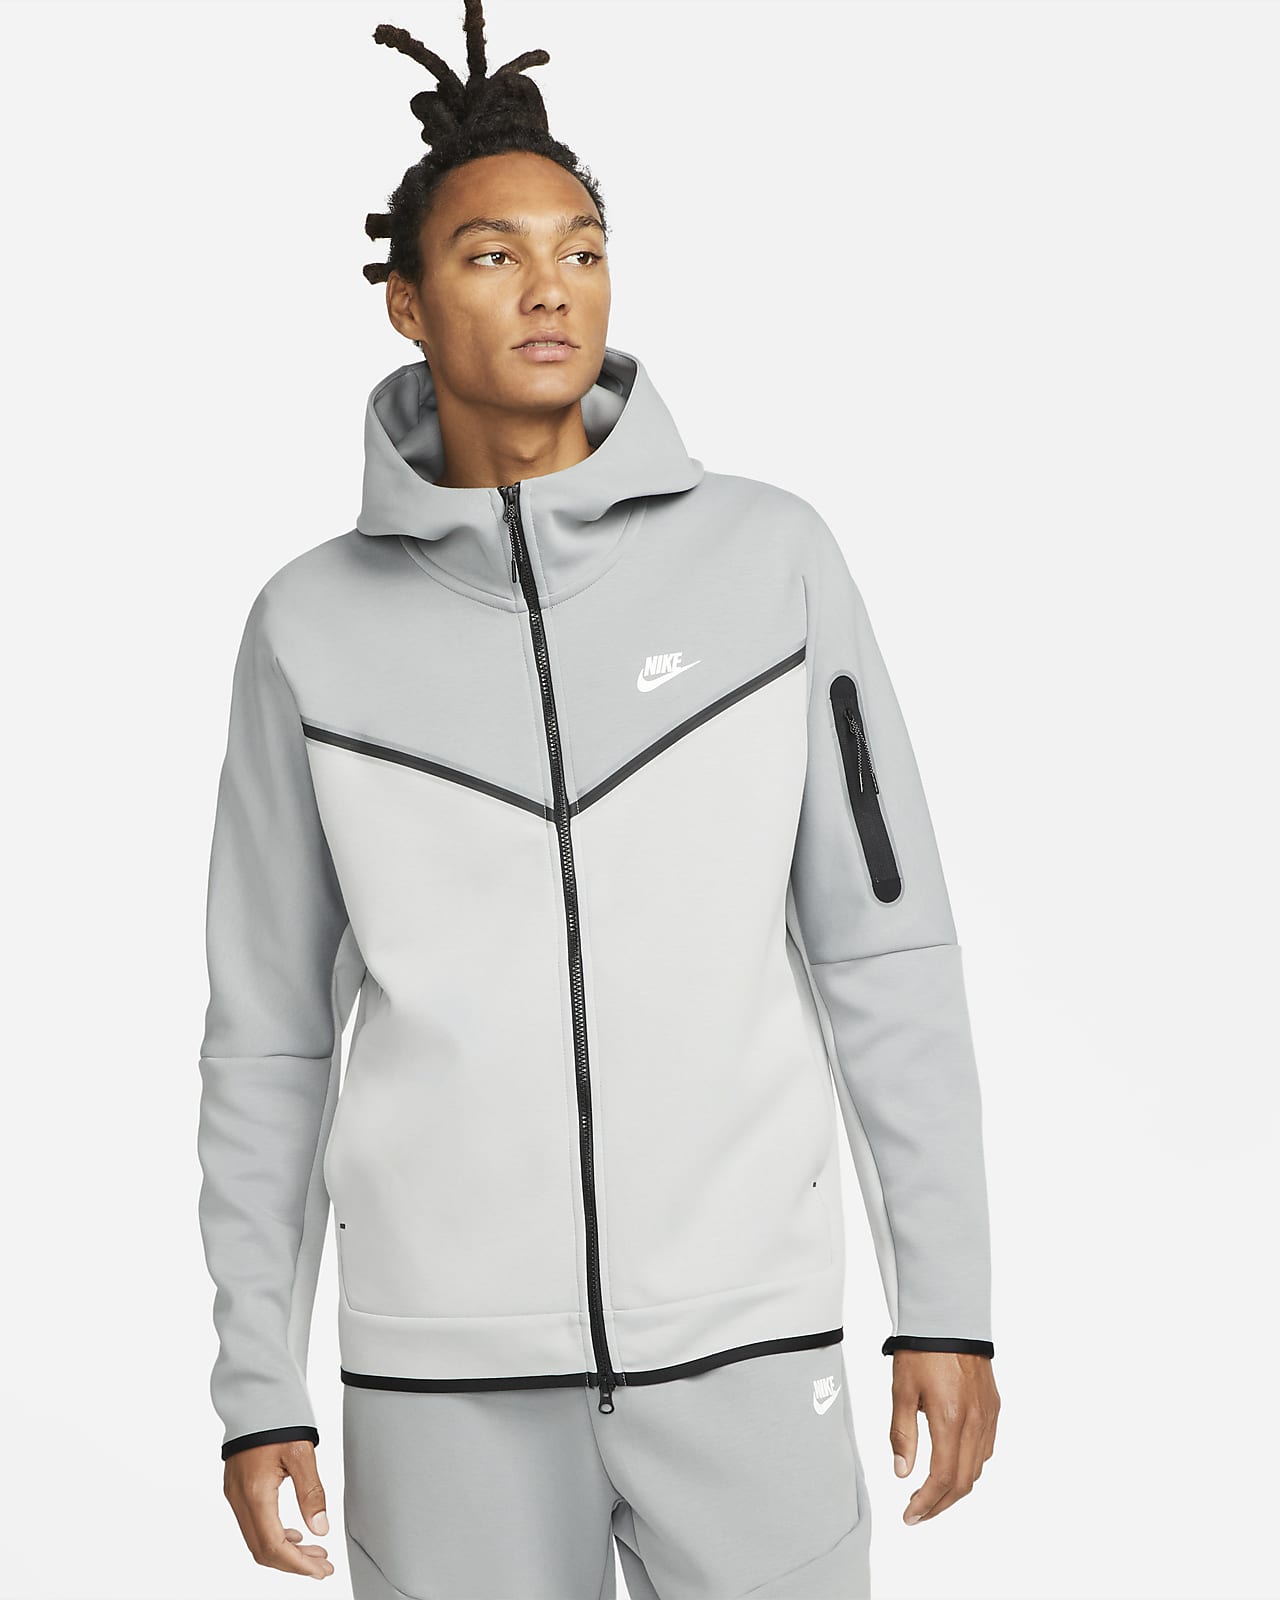 Sweat à capuche à zip Nike Sportswear Tech Fleece pour Homme